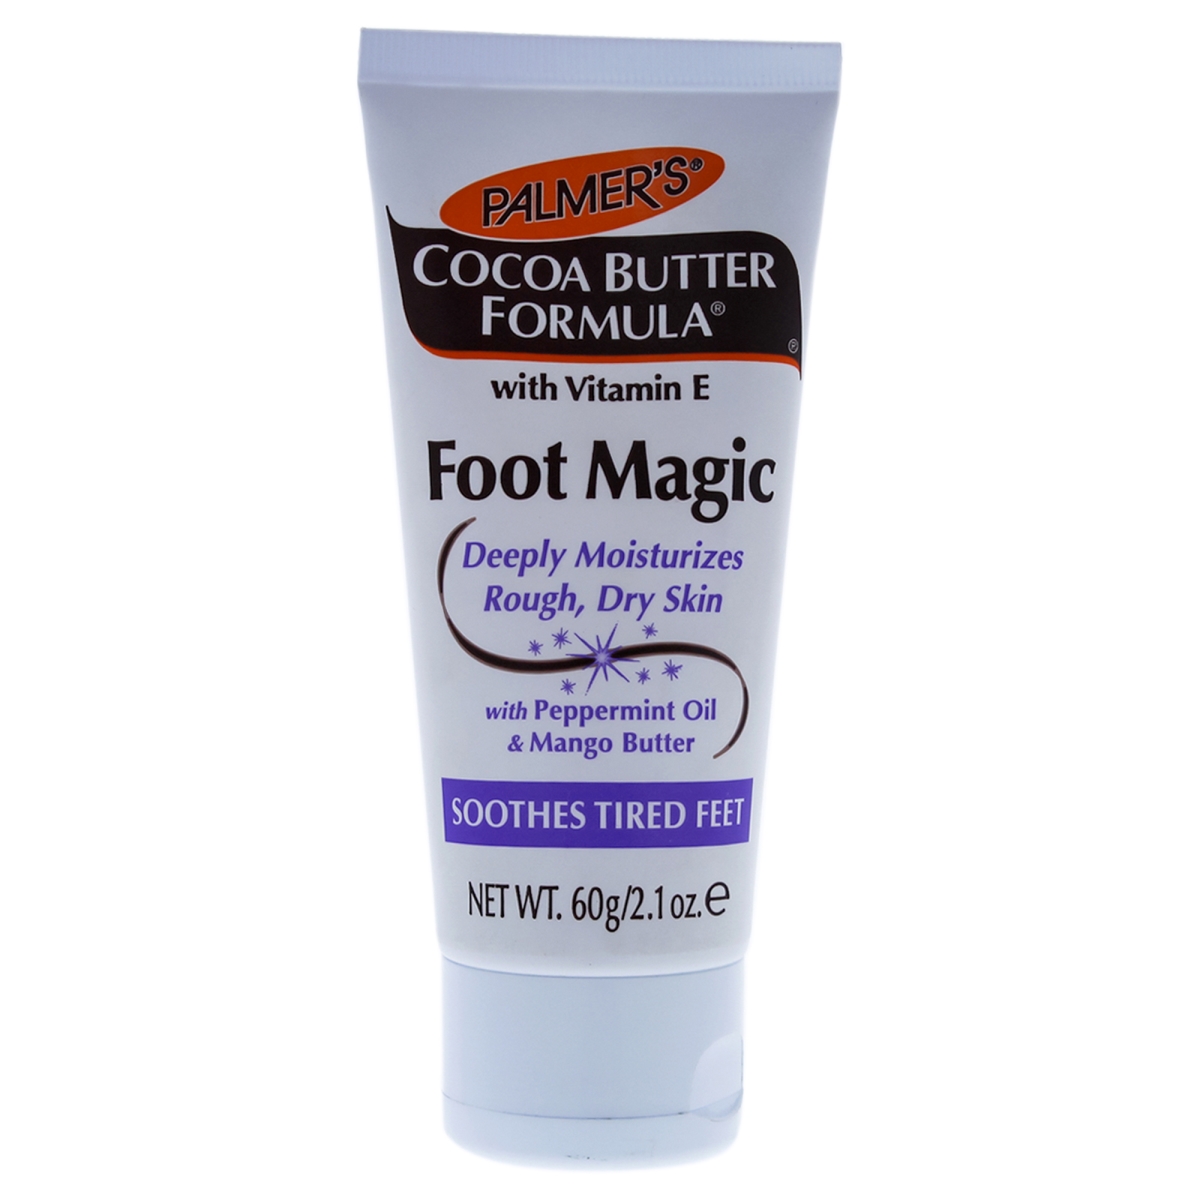 I0088369 Cocoa Butter Foot Magic Cream For Unisex - 2.1 Oz